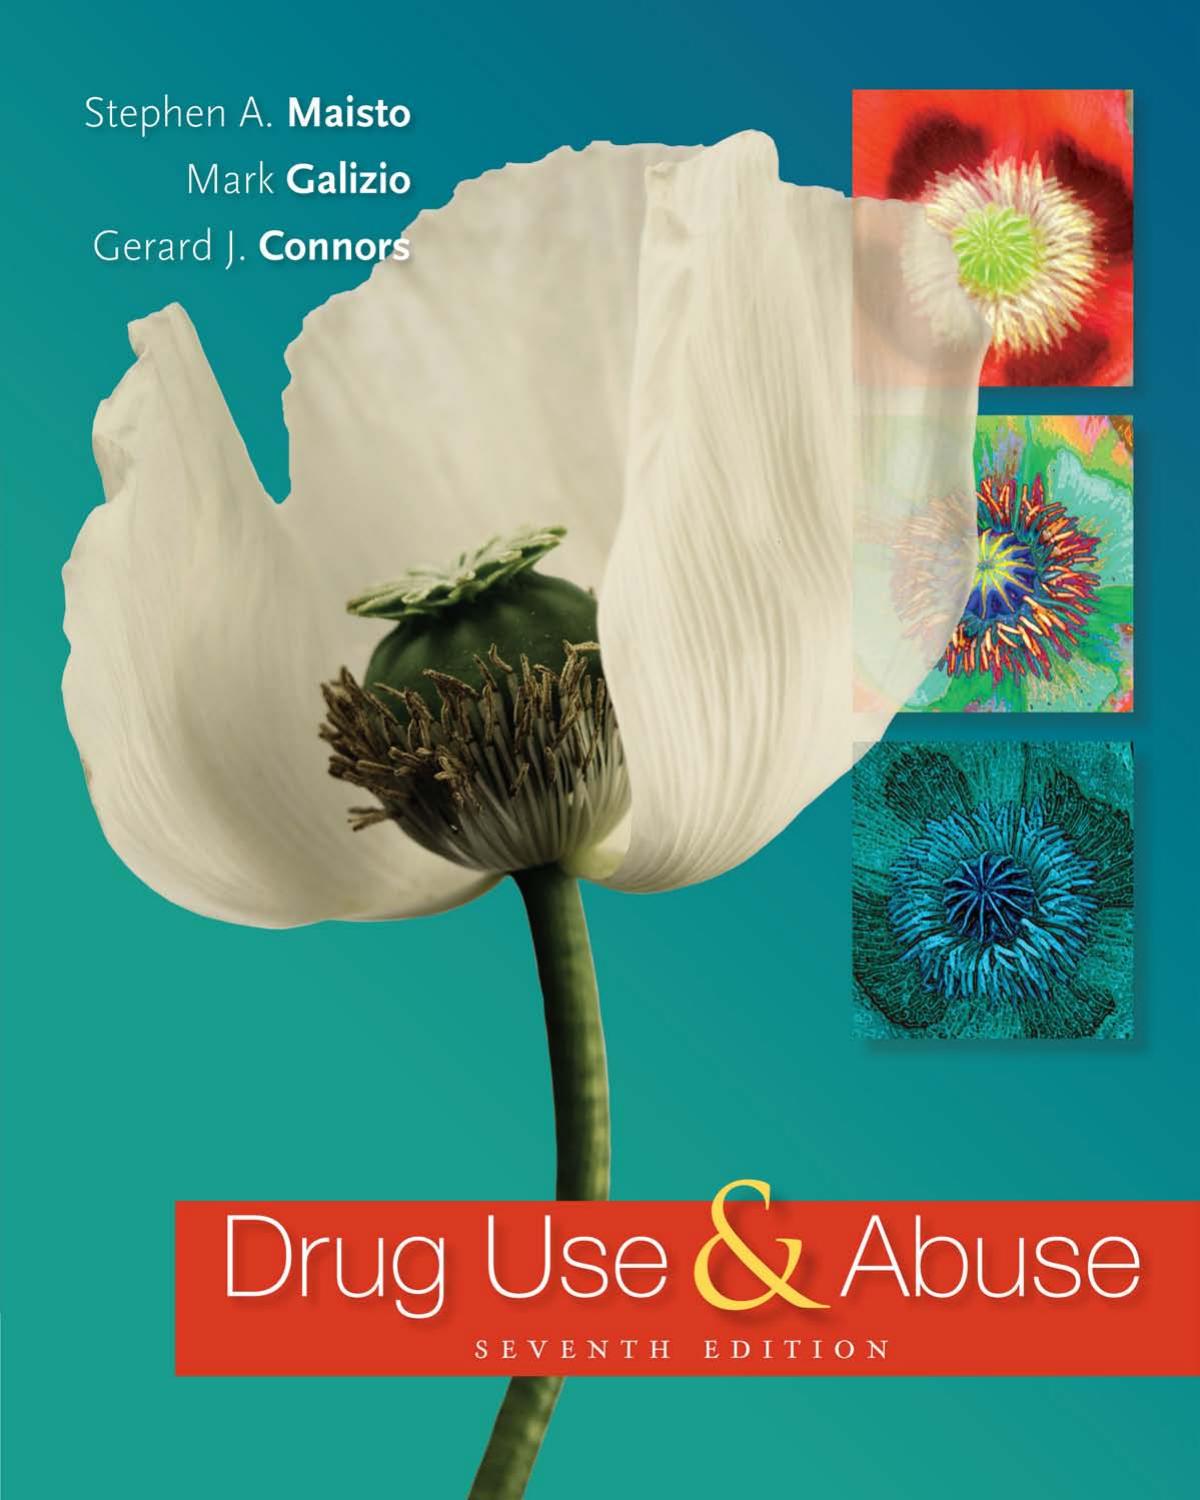 Drug Use and Abuse 7th Edition.jpg